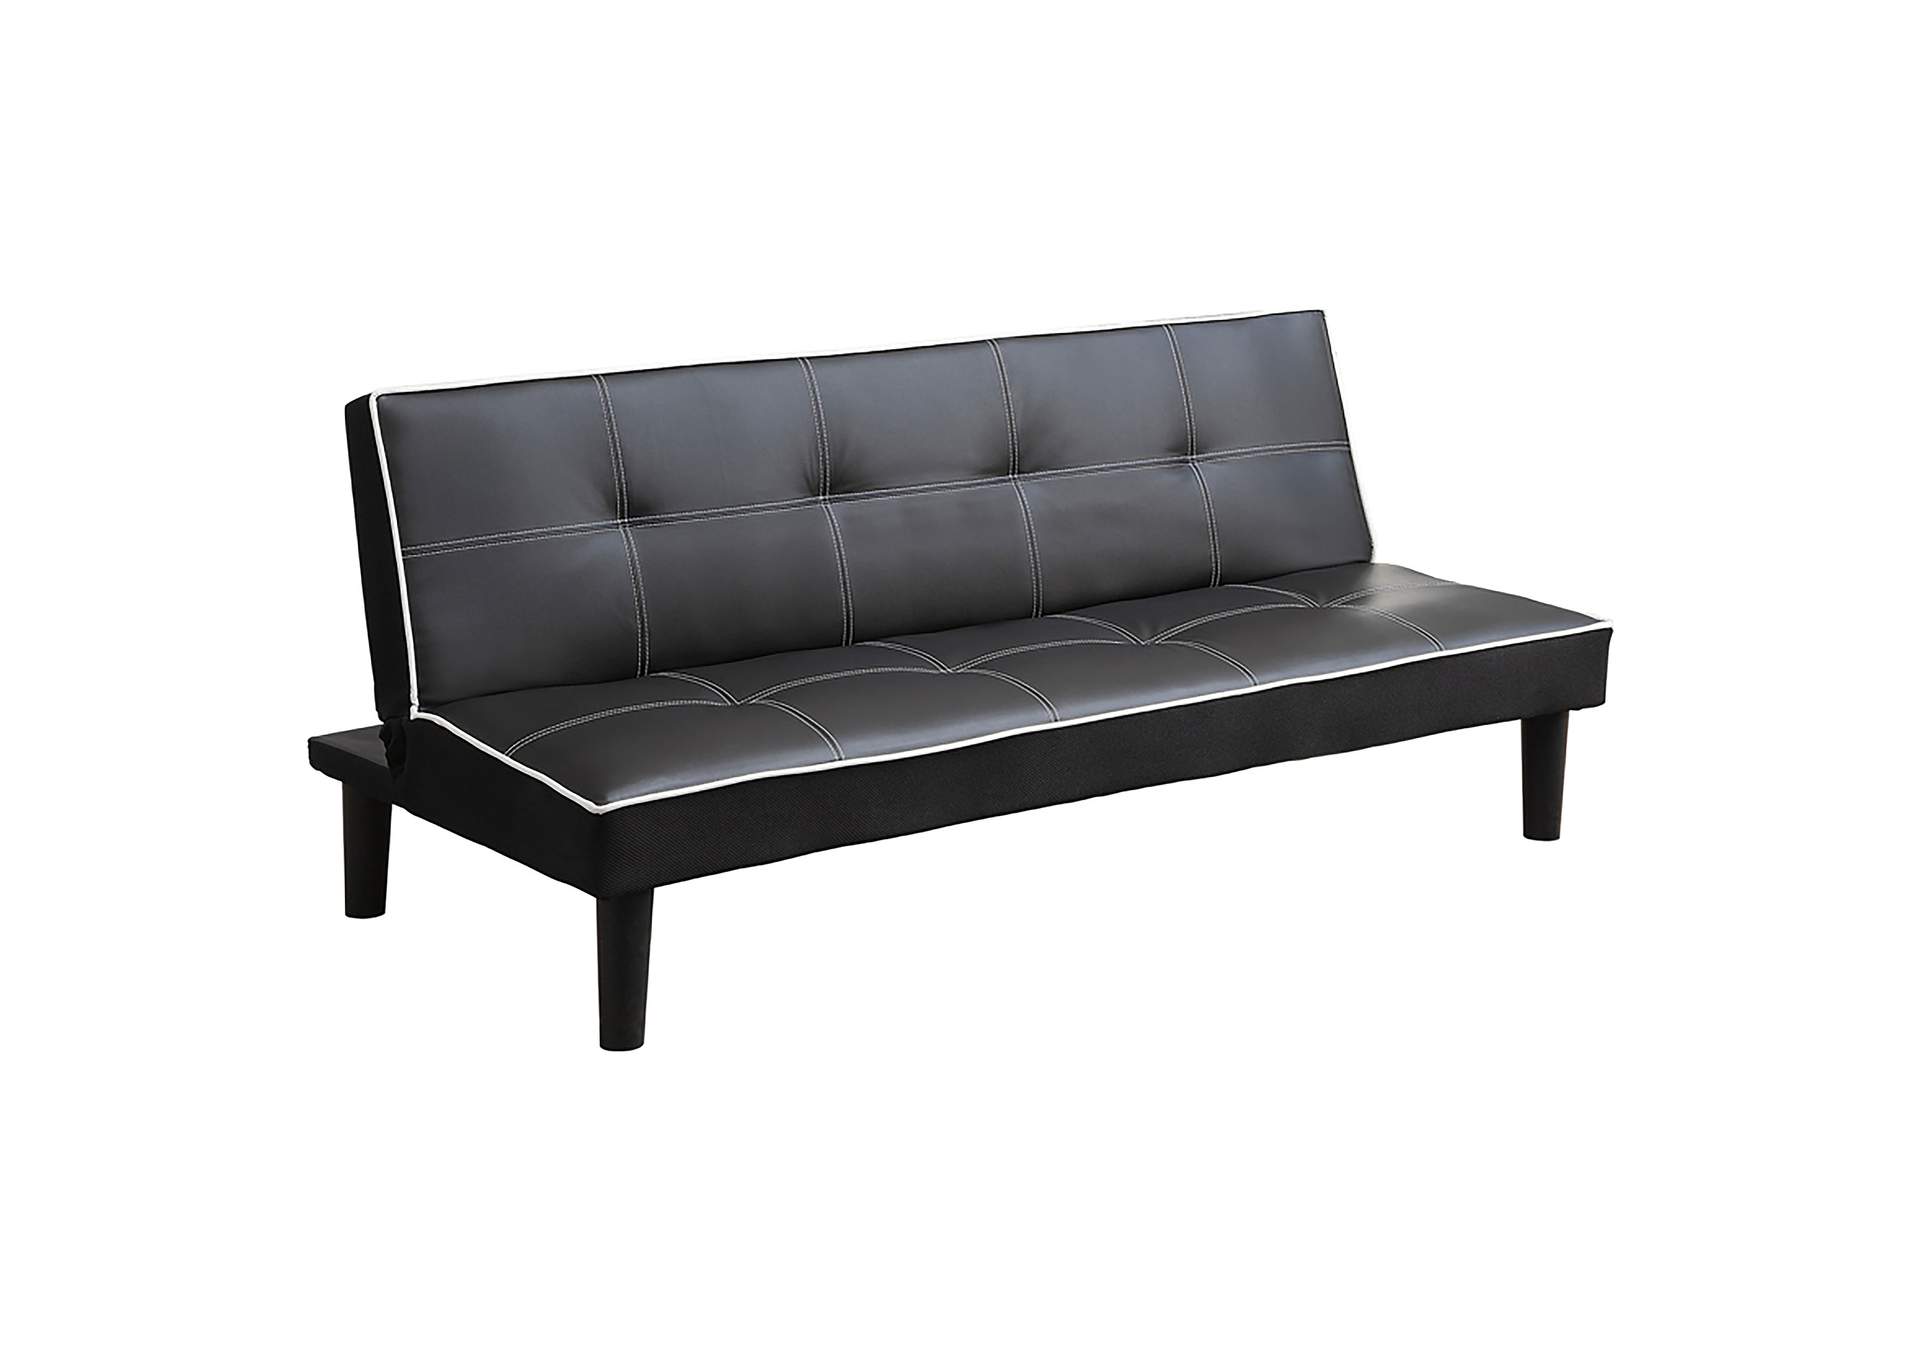 Katrina Tufted Upholstered Sofa Bed Black,Coaster Furniture